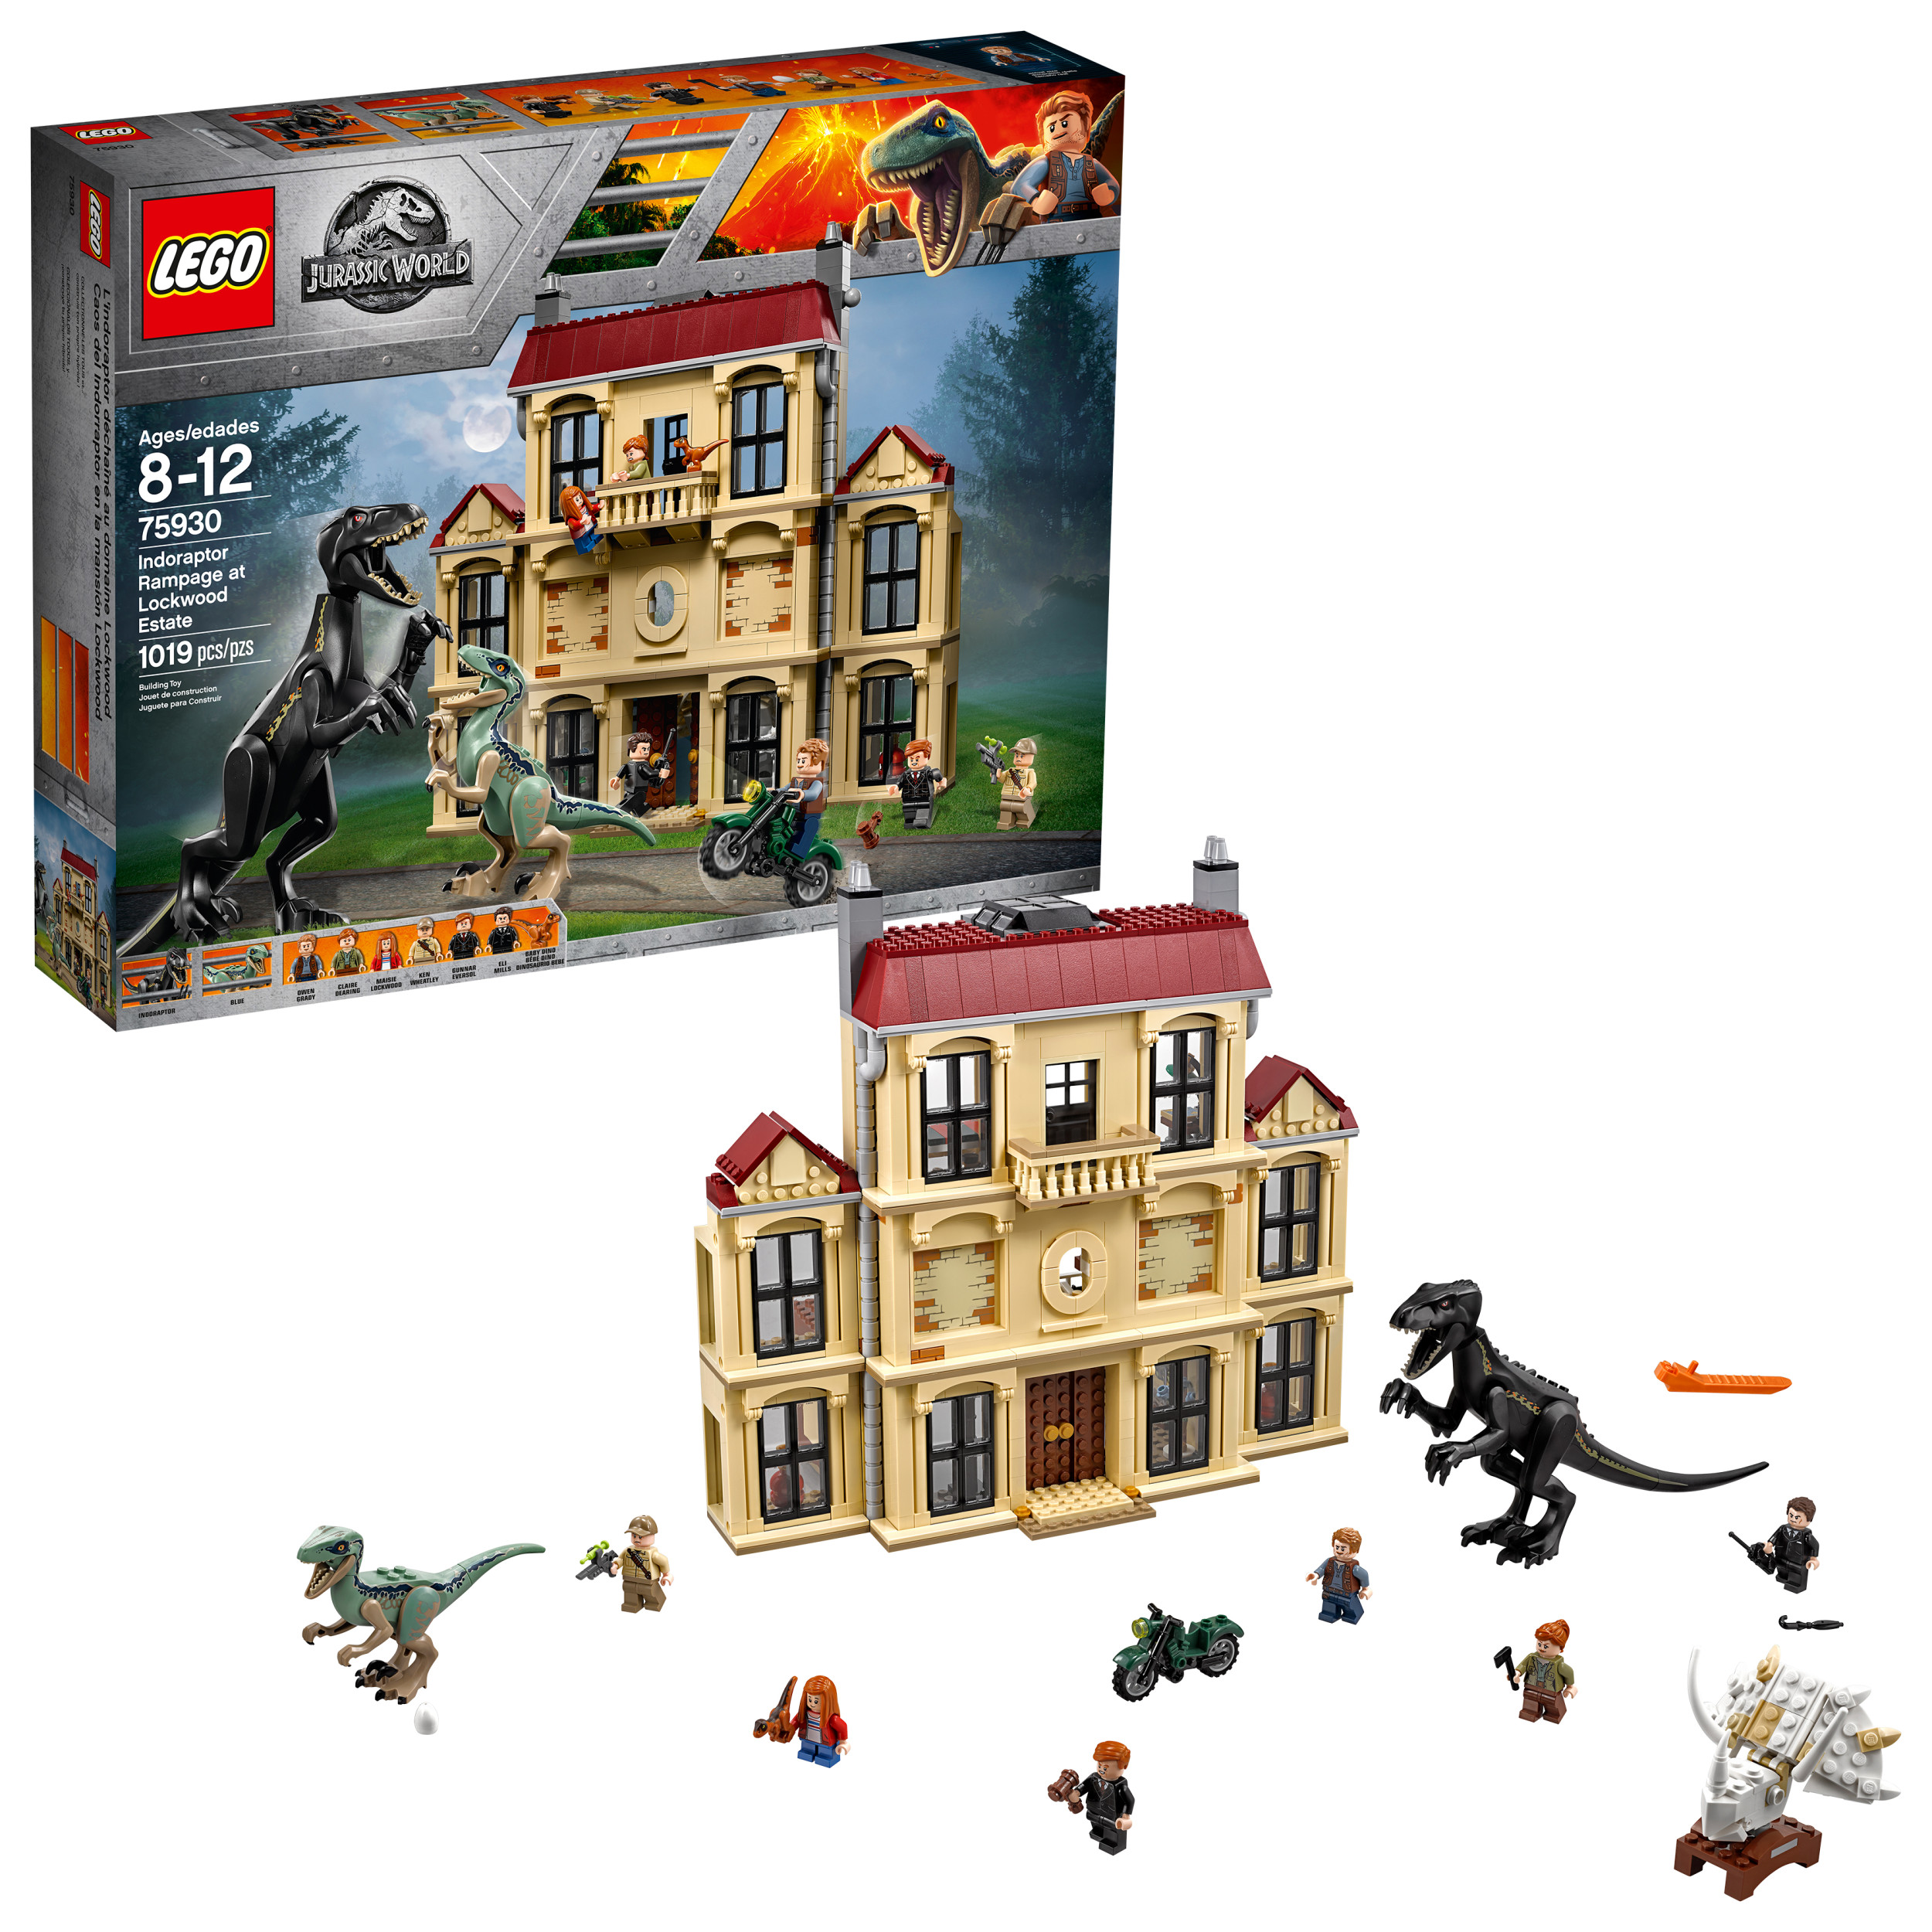 LEGO Jurassic World Indoraptor Rampage at Lockwood Estate 75930 - image 1 of 5